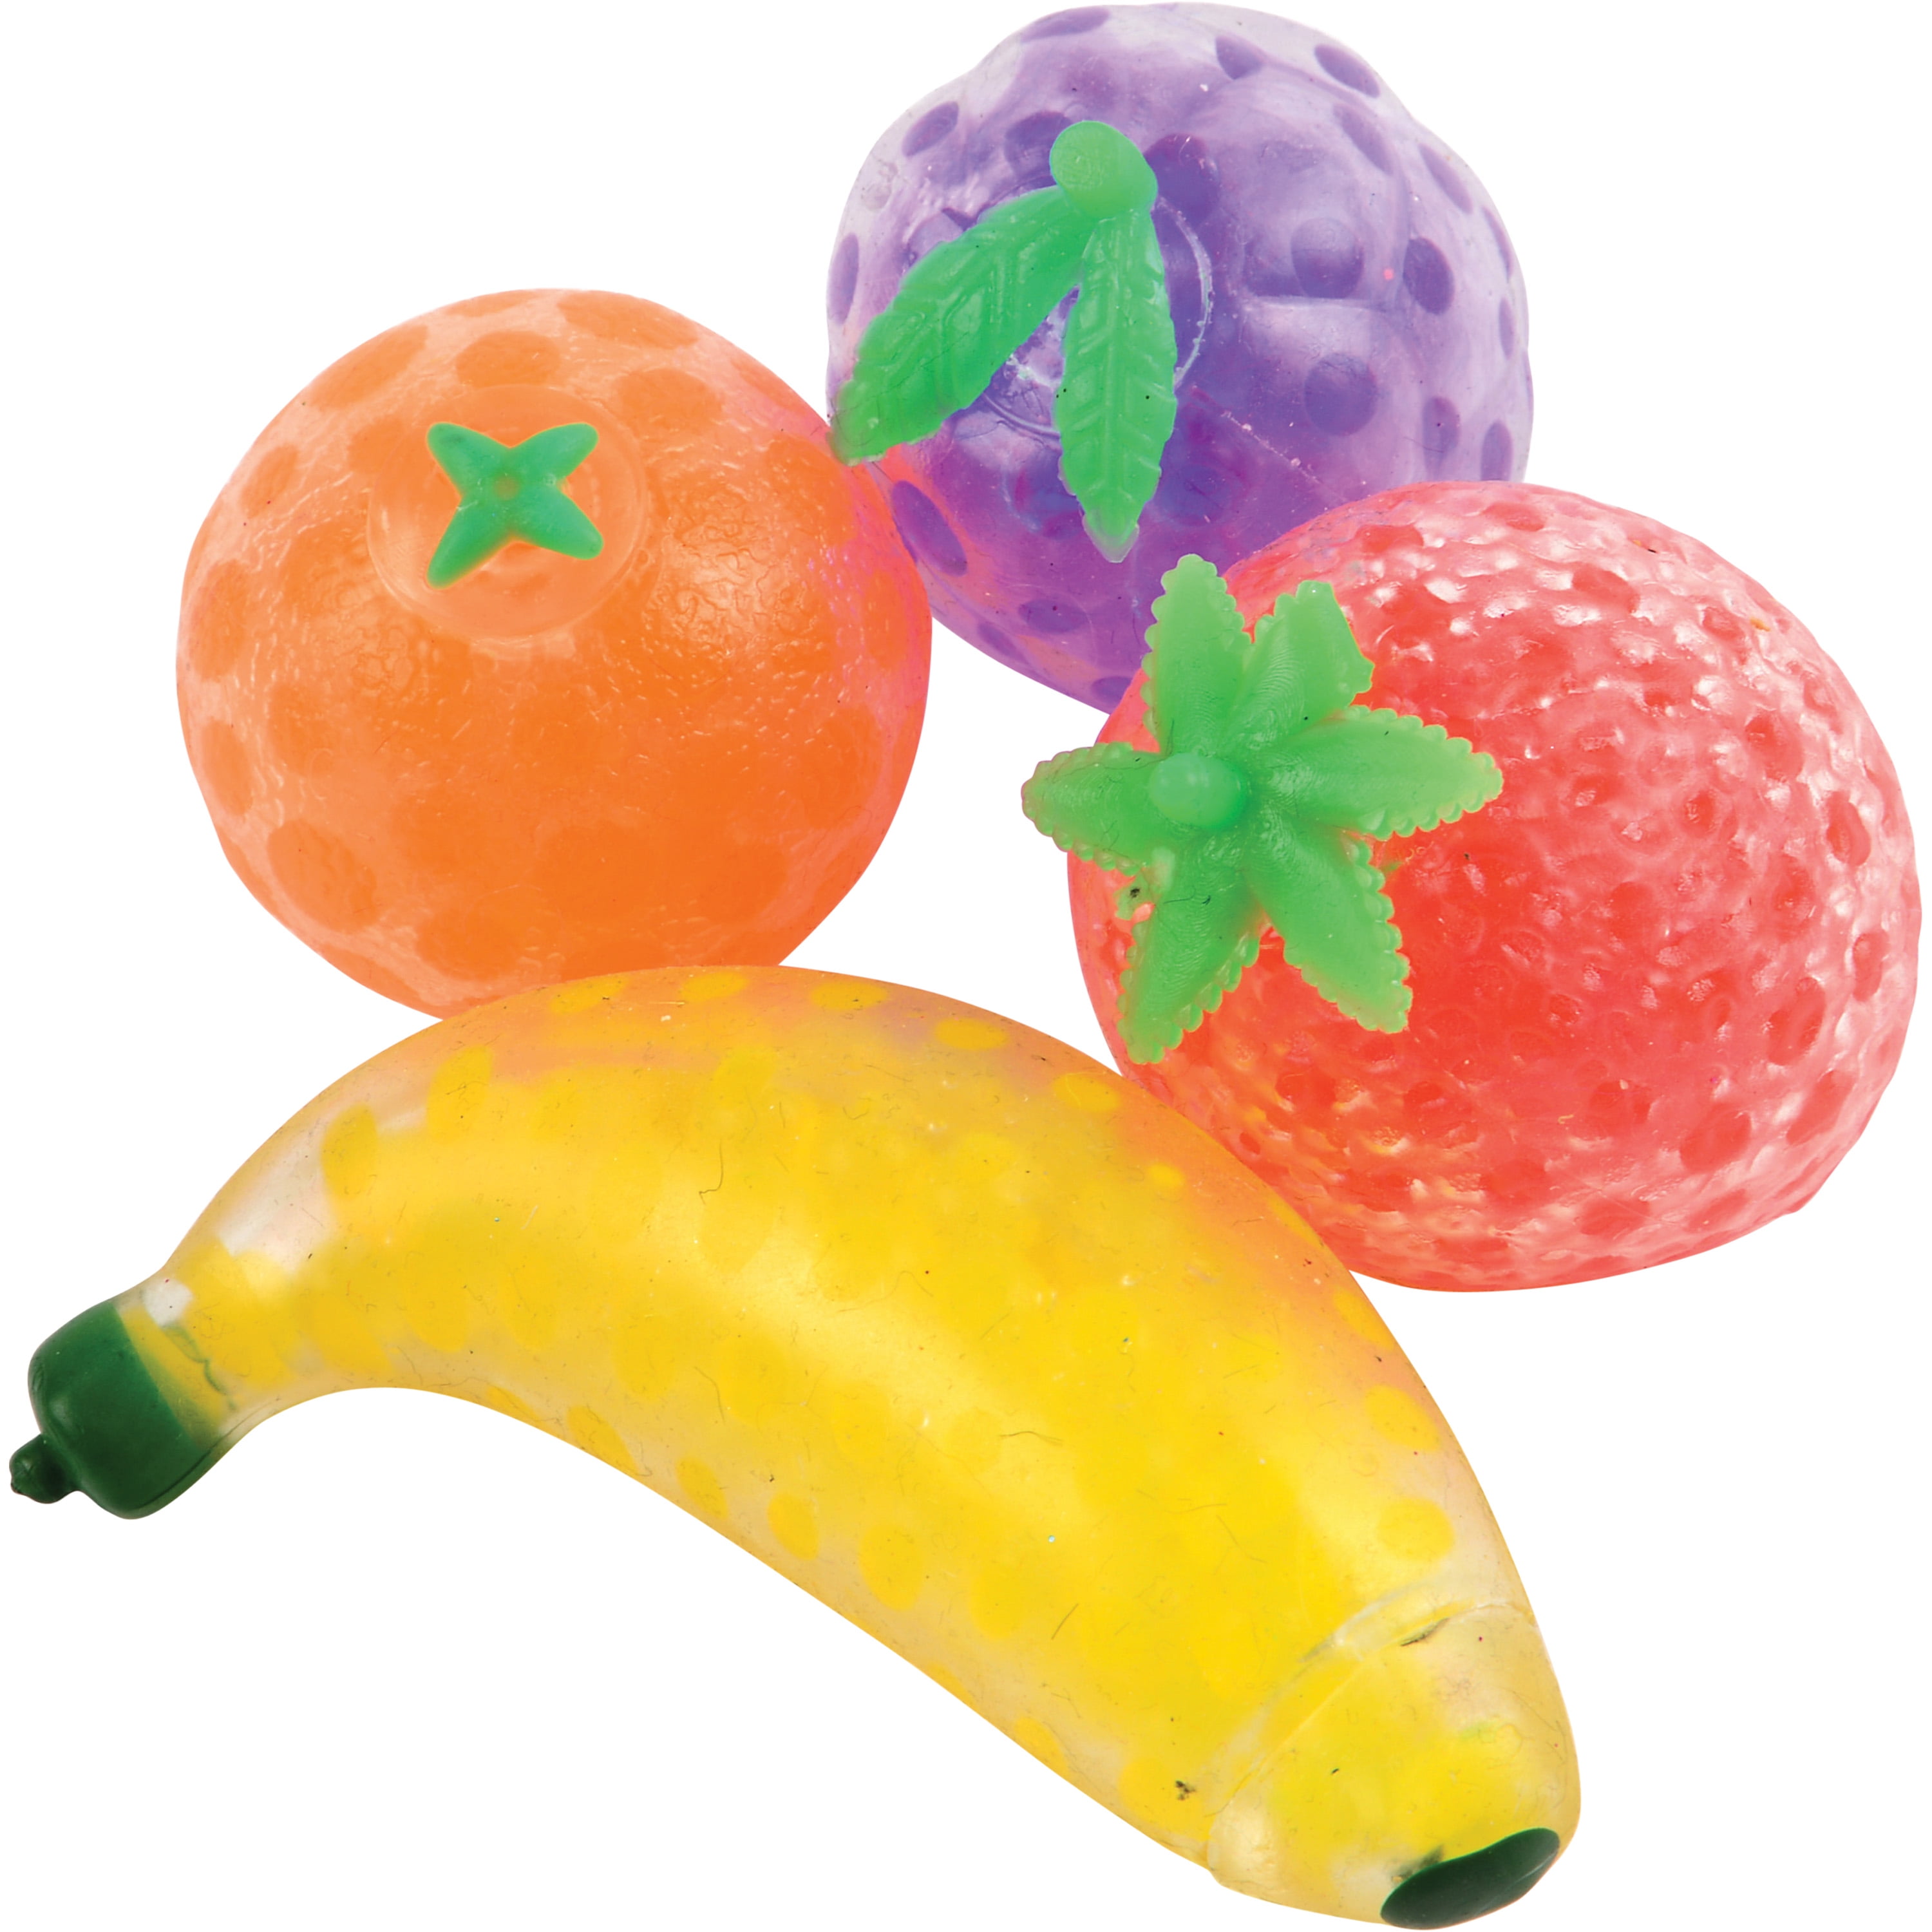 Сквиши фрукты. СКВИШИ овощи и фрукты. Банан пластиковый игрушка. СКВИШИ фрукты набор. Cutie Fruities игрушки.